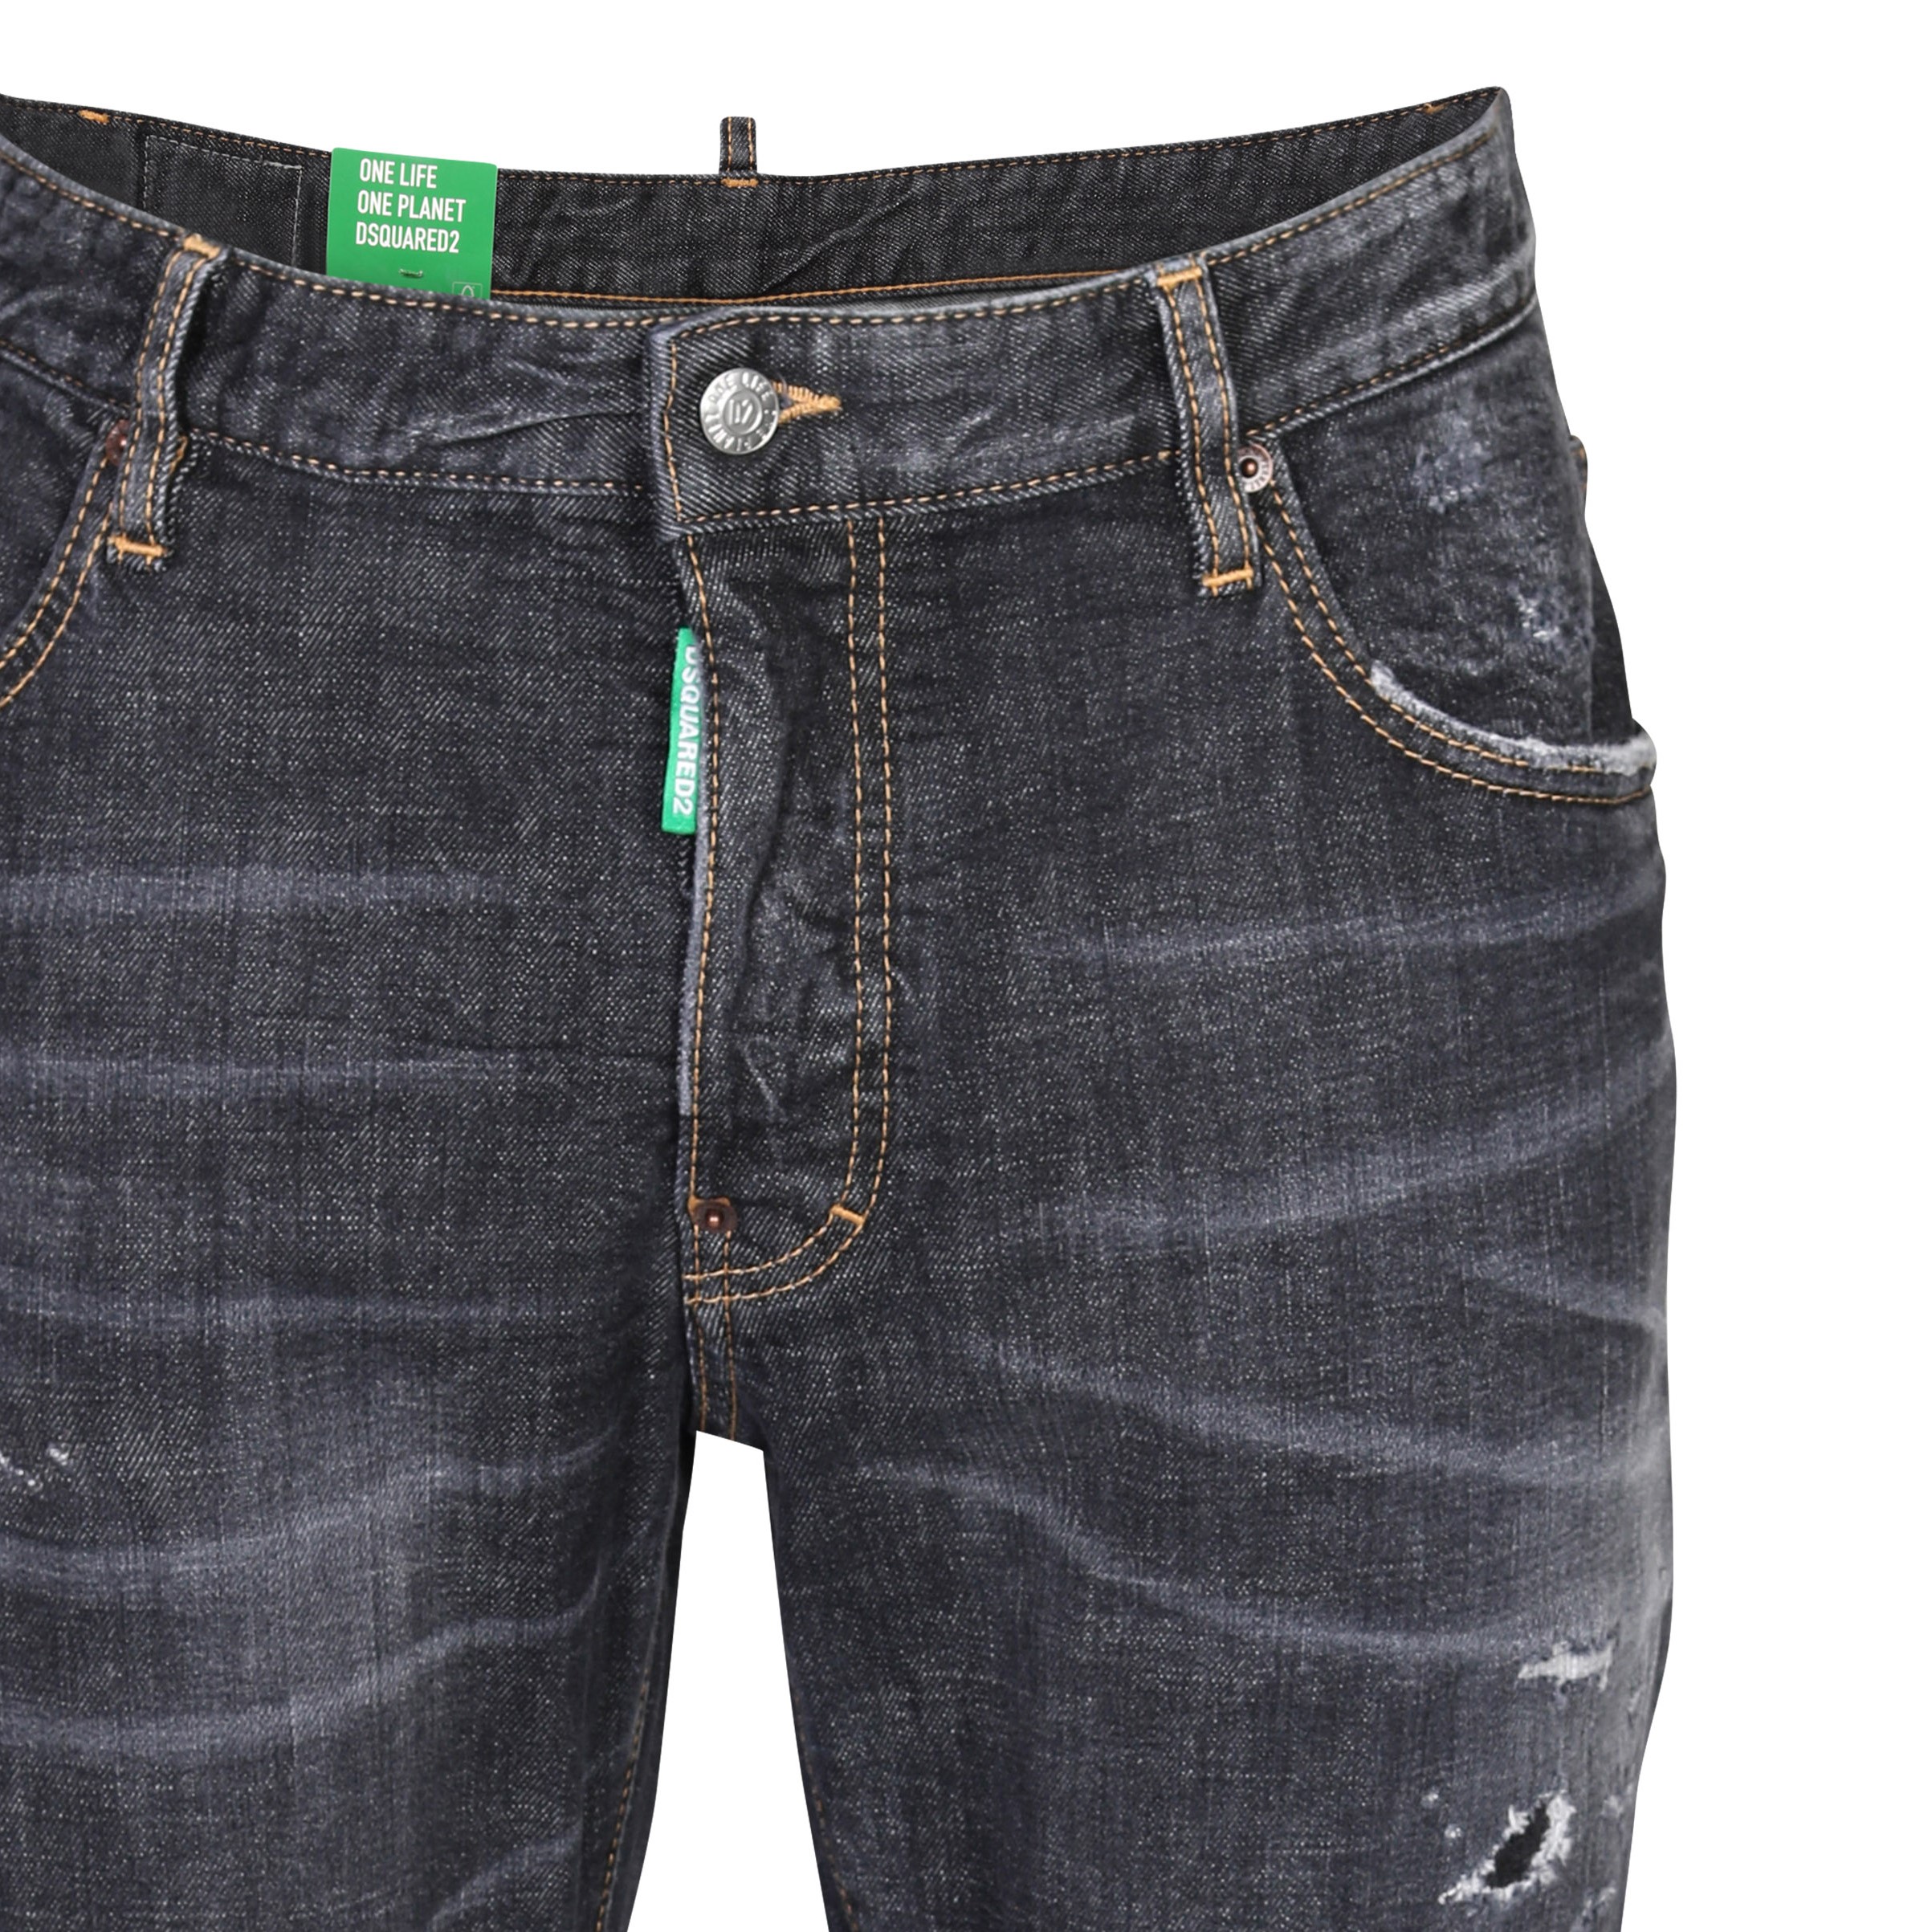 DSQUARED2 Green Label Skater Jeans in Washed Black